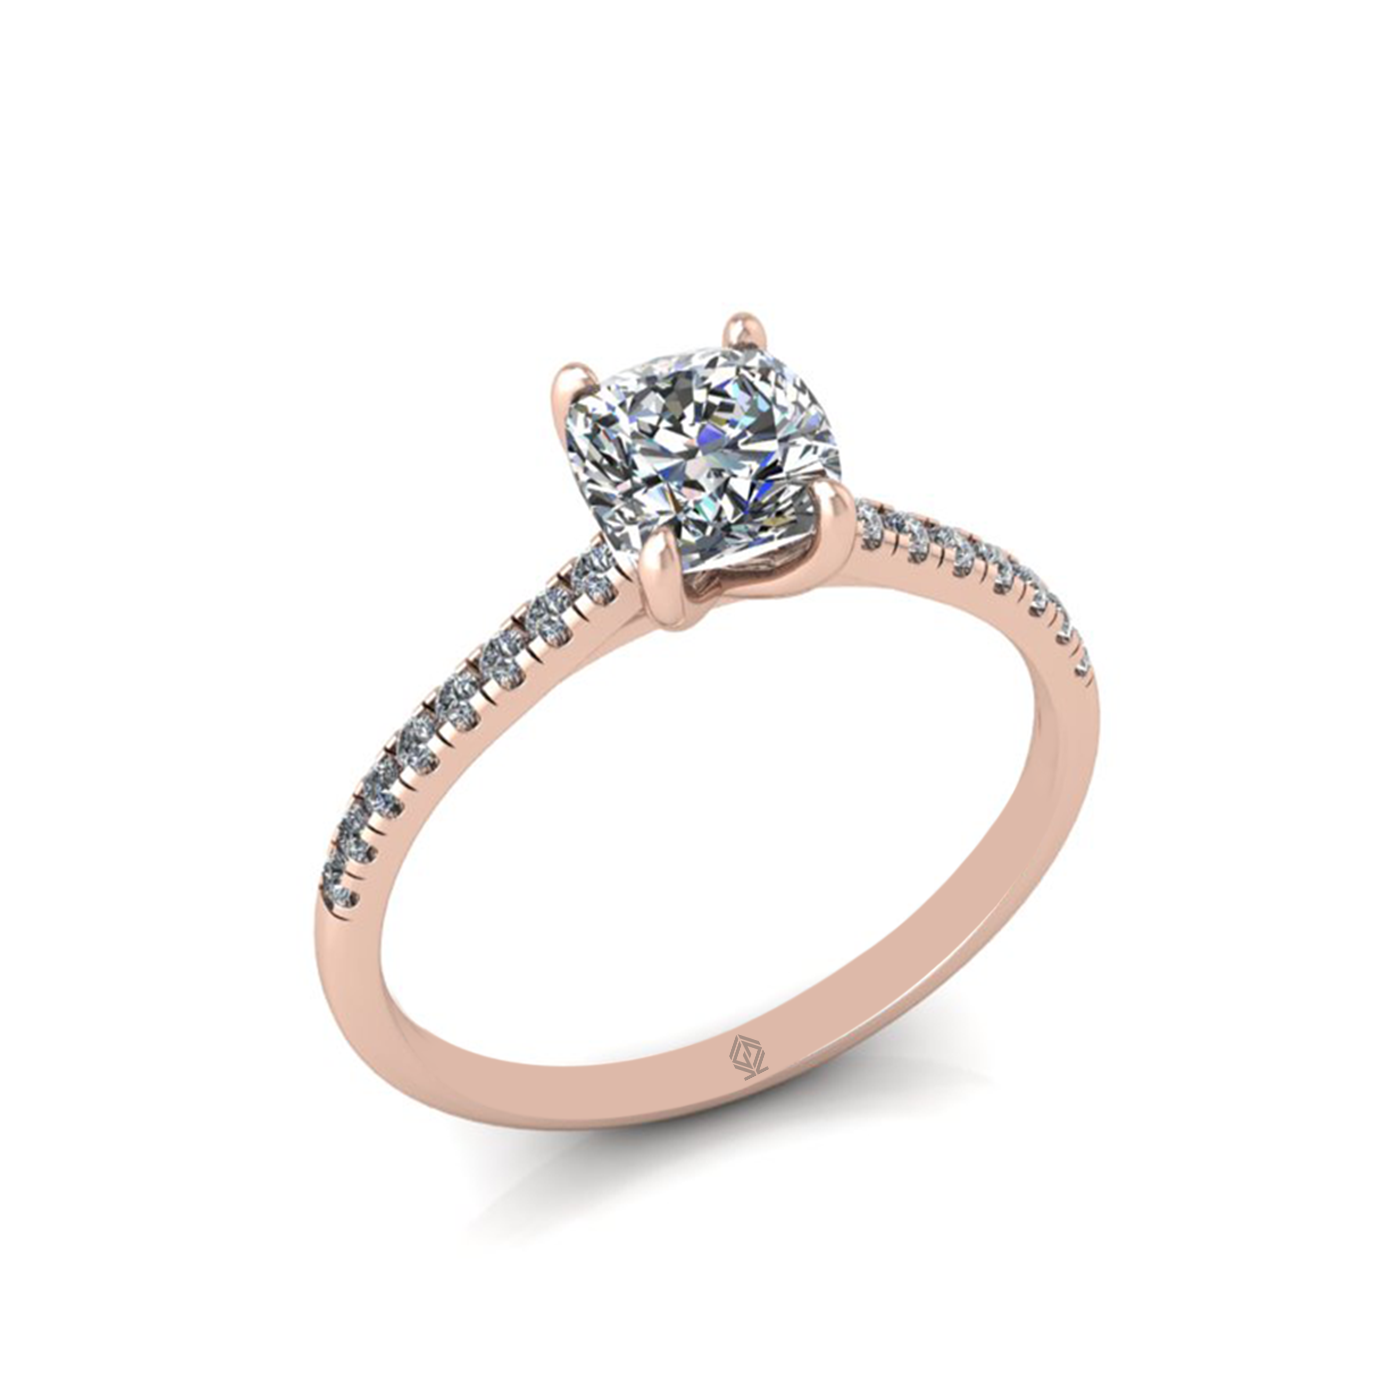 18k rose gold  0,30 ct 4 prongs cushion cut diamond engagement ring with whisper thin pavÉ set band